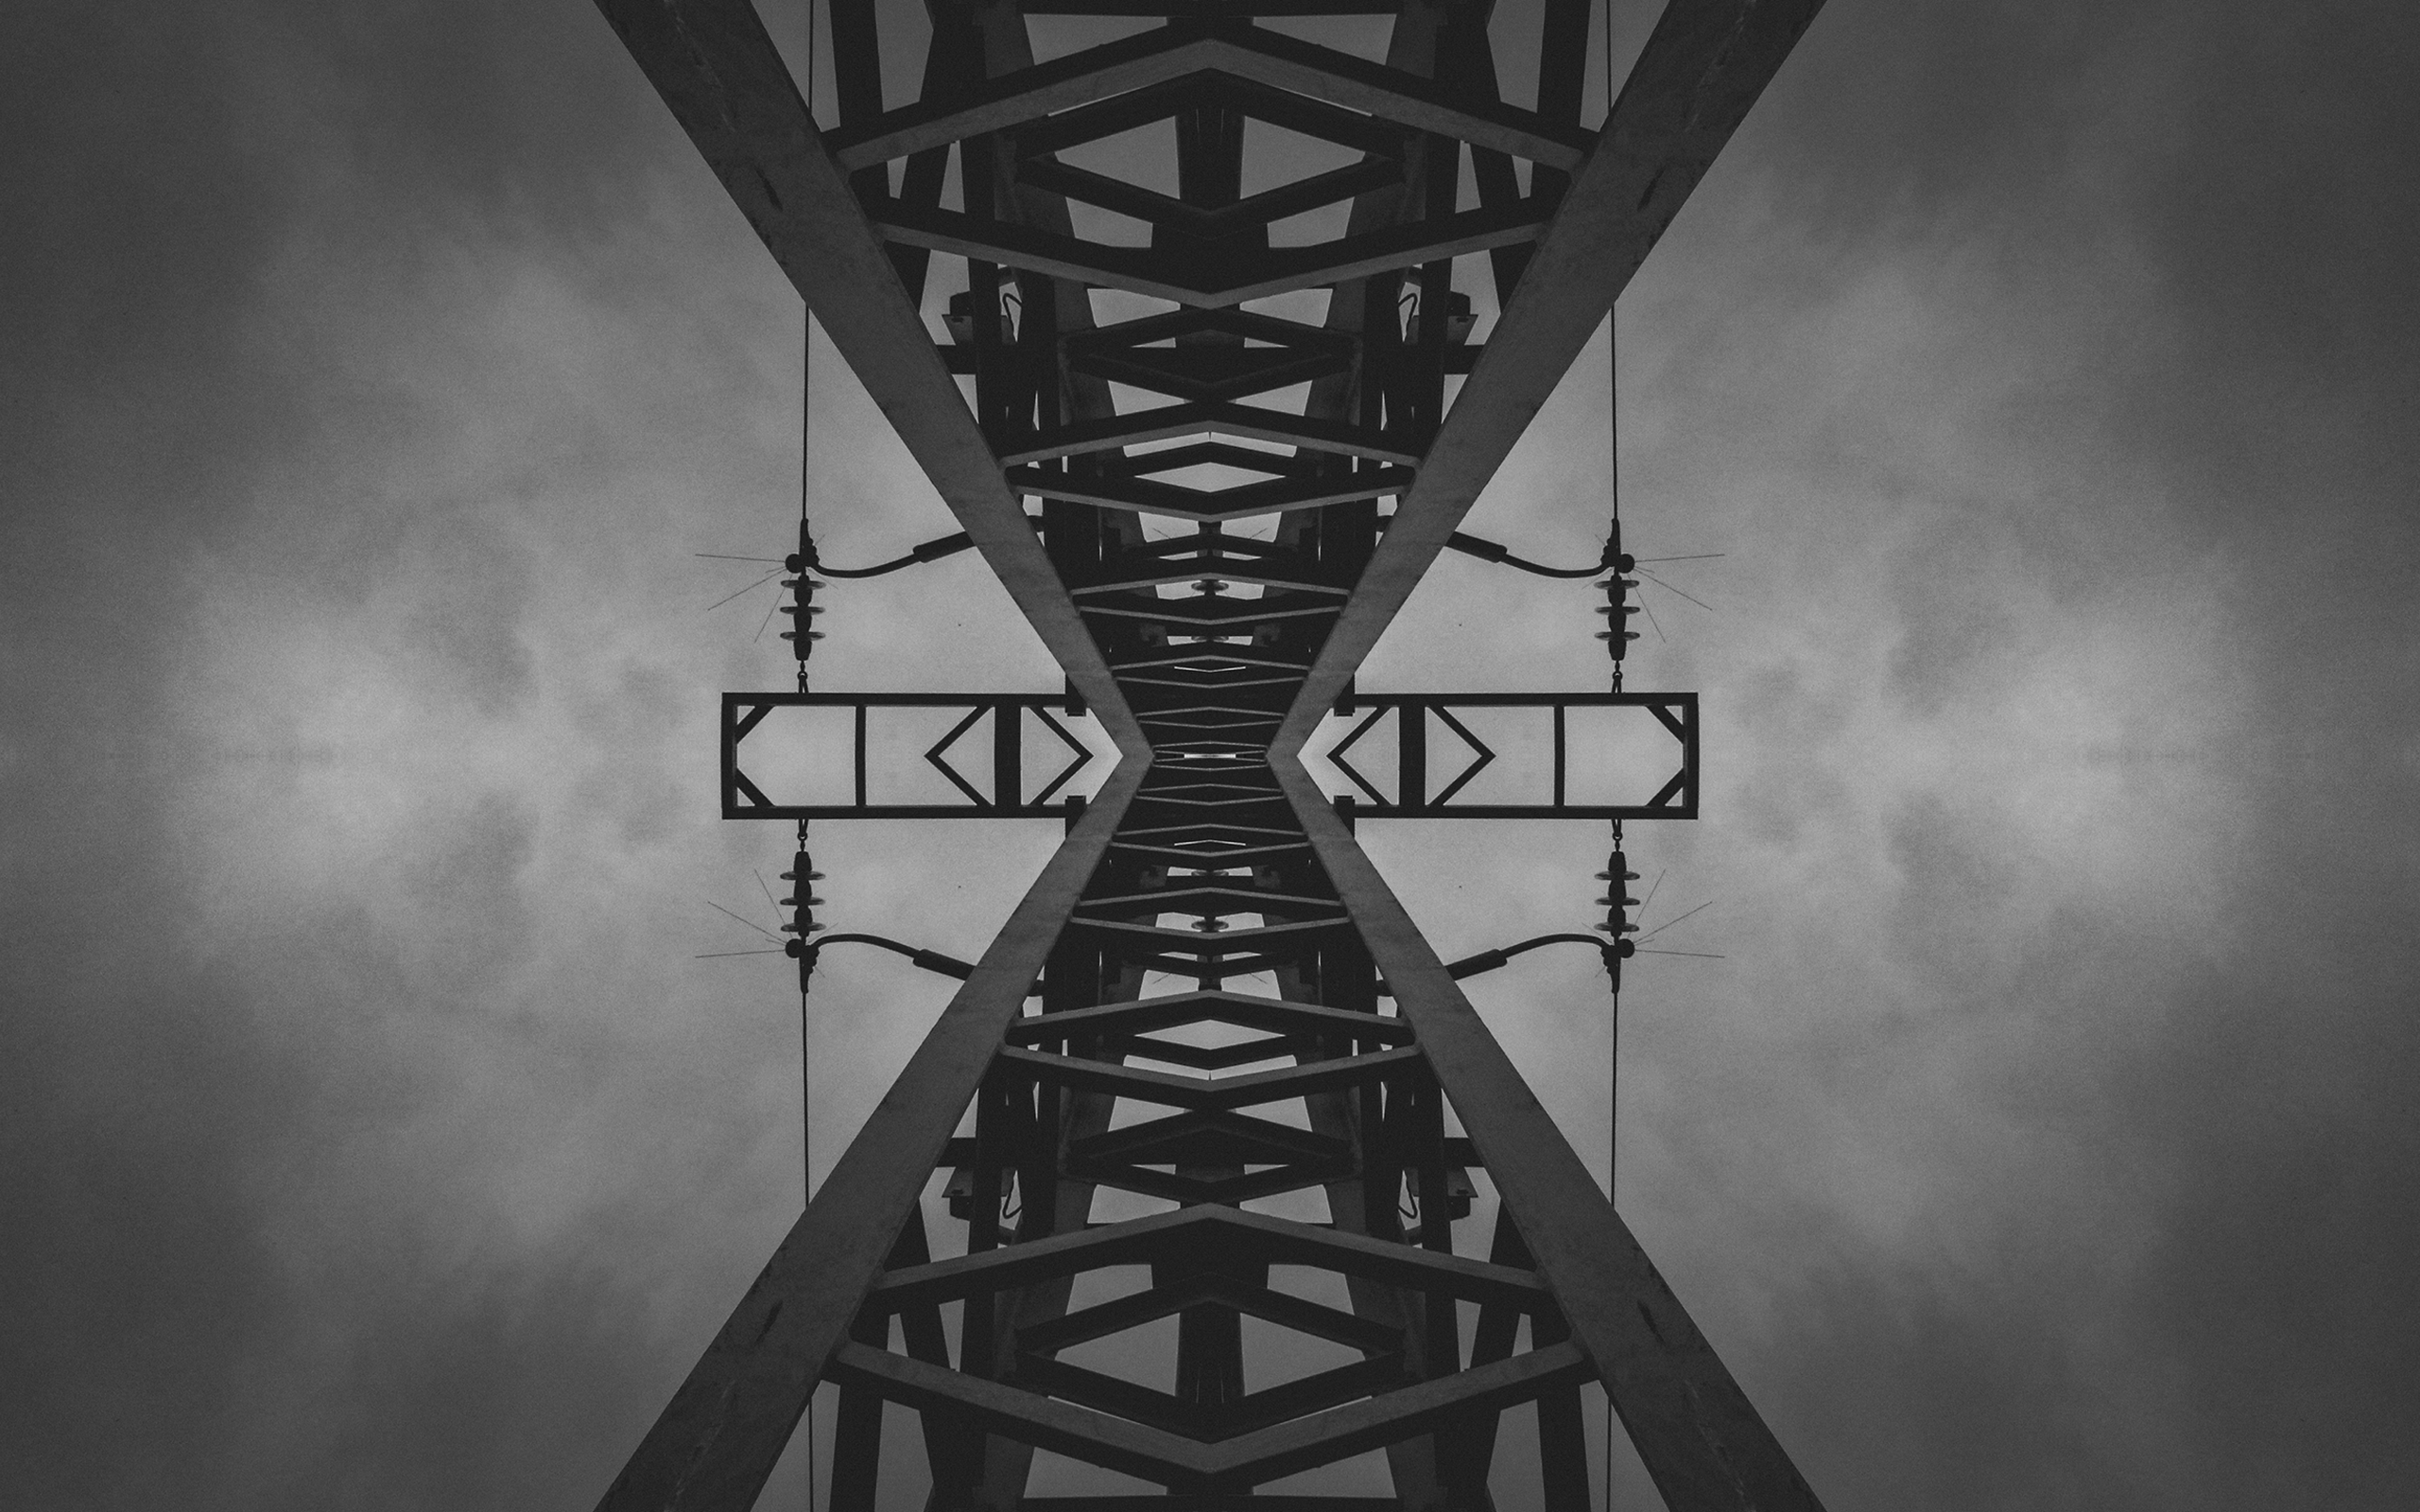 General 2560x1600 monochrome utility pole electricity power lines photoshopped symmetry Germany gray gloomy depressing photo manipulation